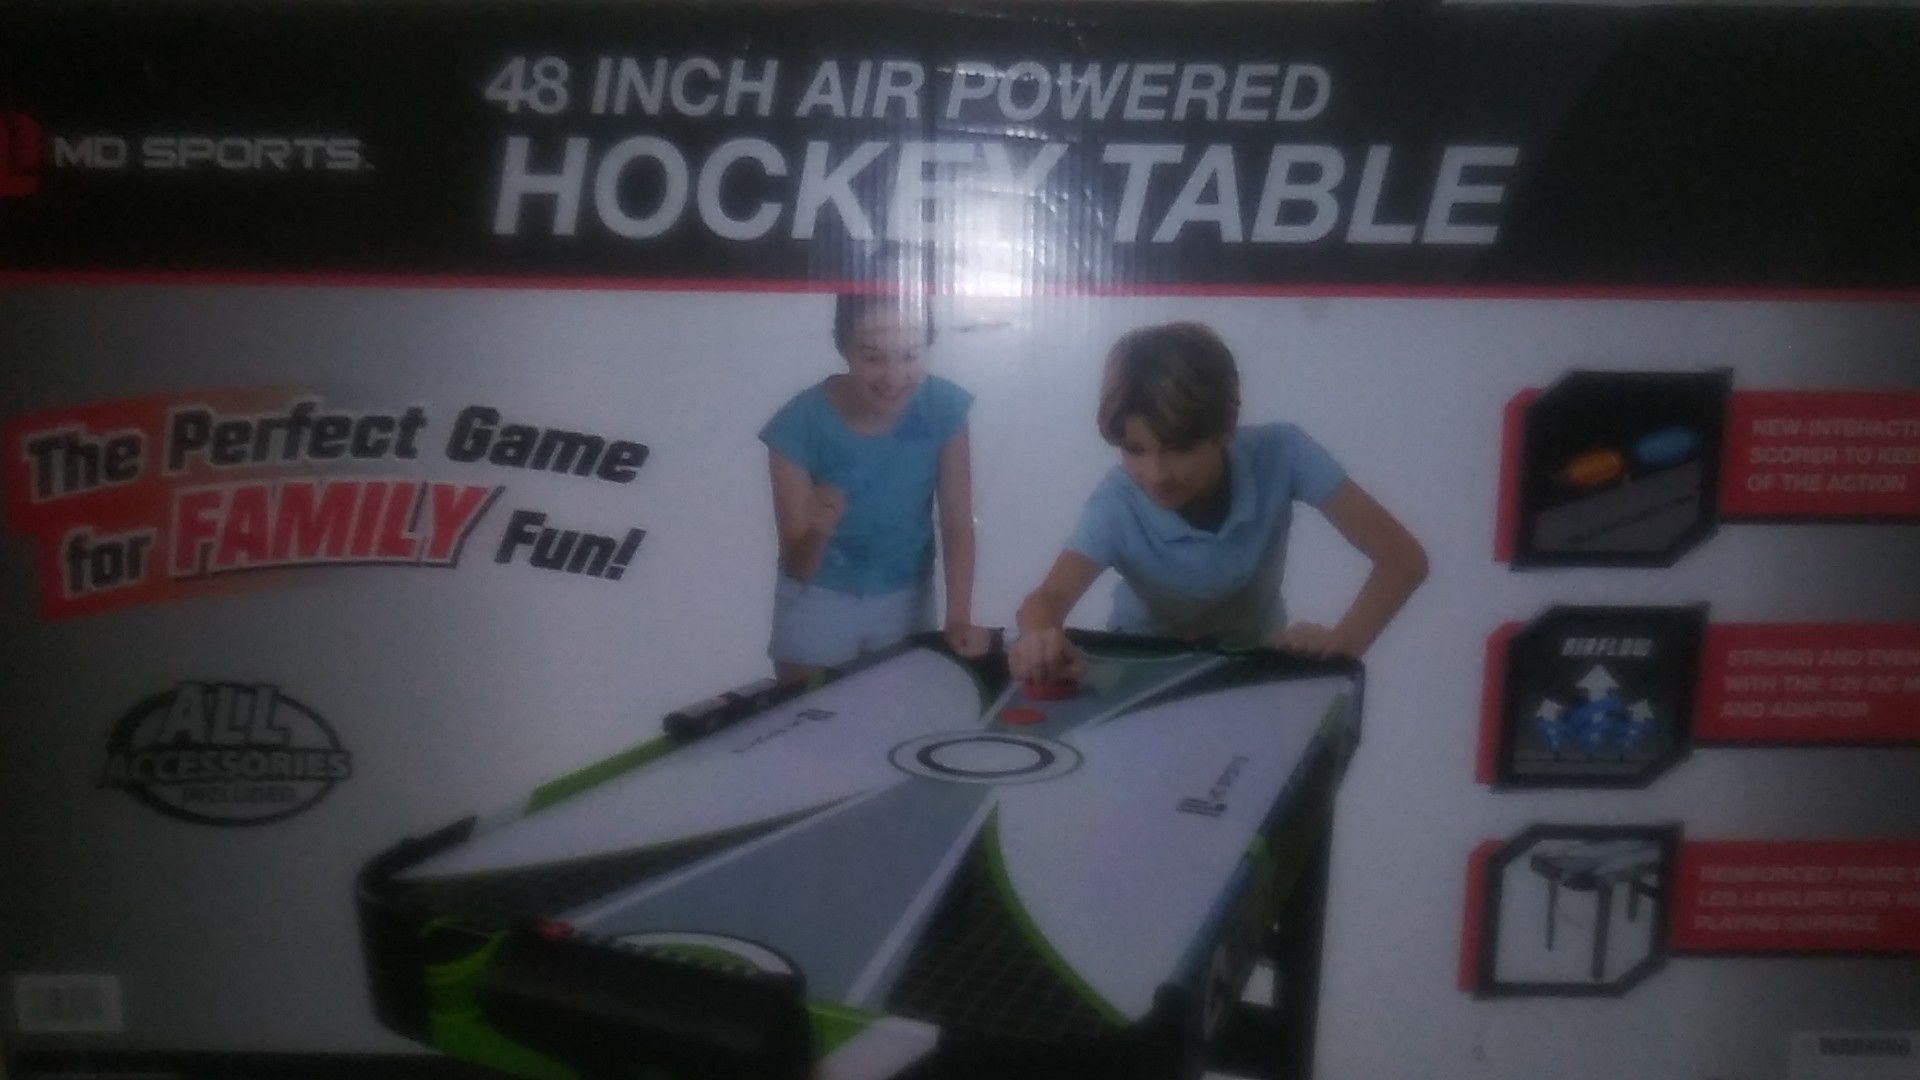 48 Inch Air Powered Hockey Table